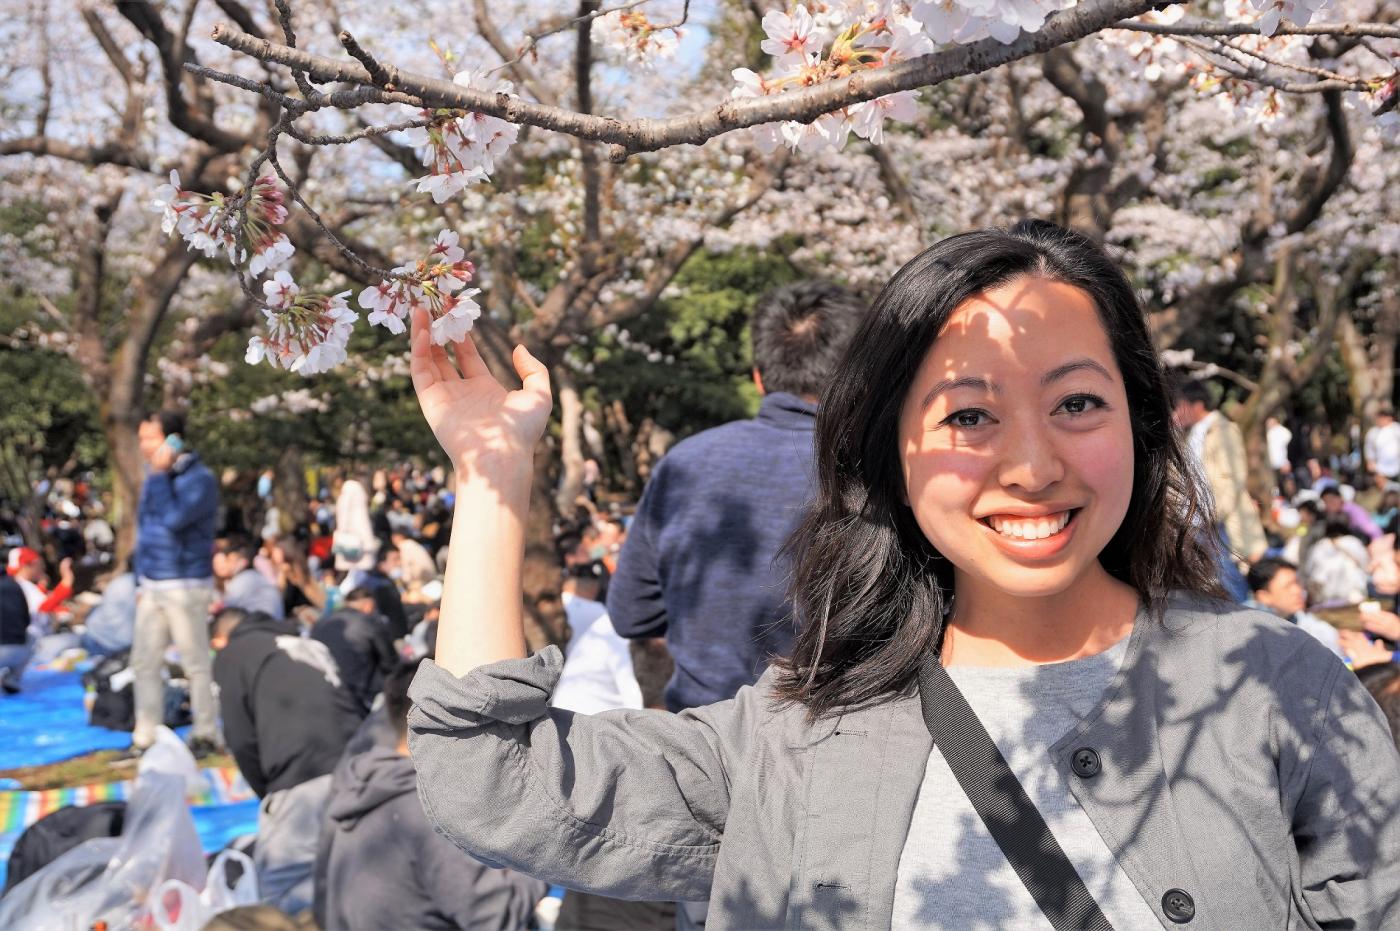 Lorraine enjoying the cherry blossoms at Yoyogi Park, Tokyo.